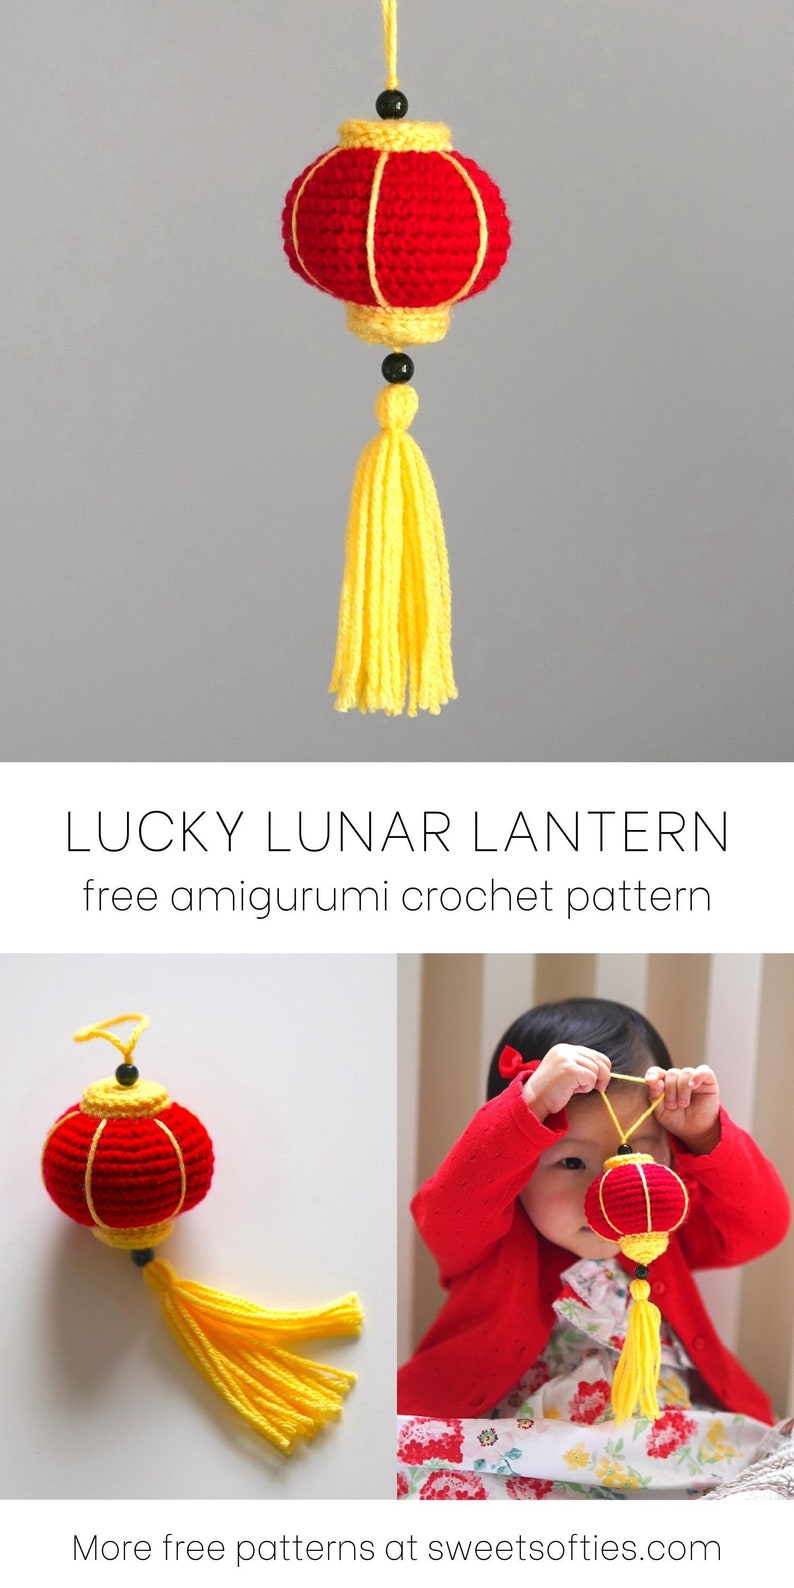 Lucky Lunar Lantern Free Amigurumi Crochet Pattern for Chinese New Year DIY Tutorial quick easy yarn holiday craft kids family handmade image 8